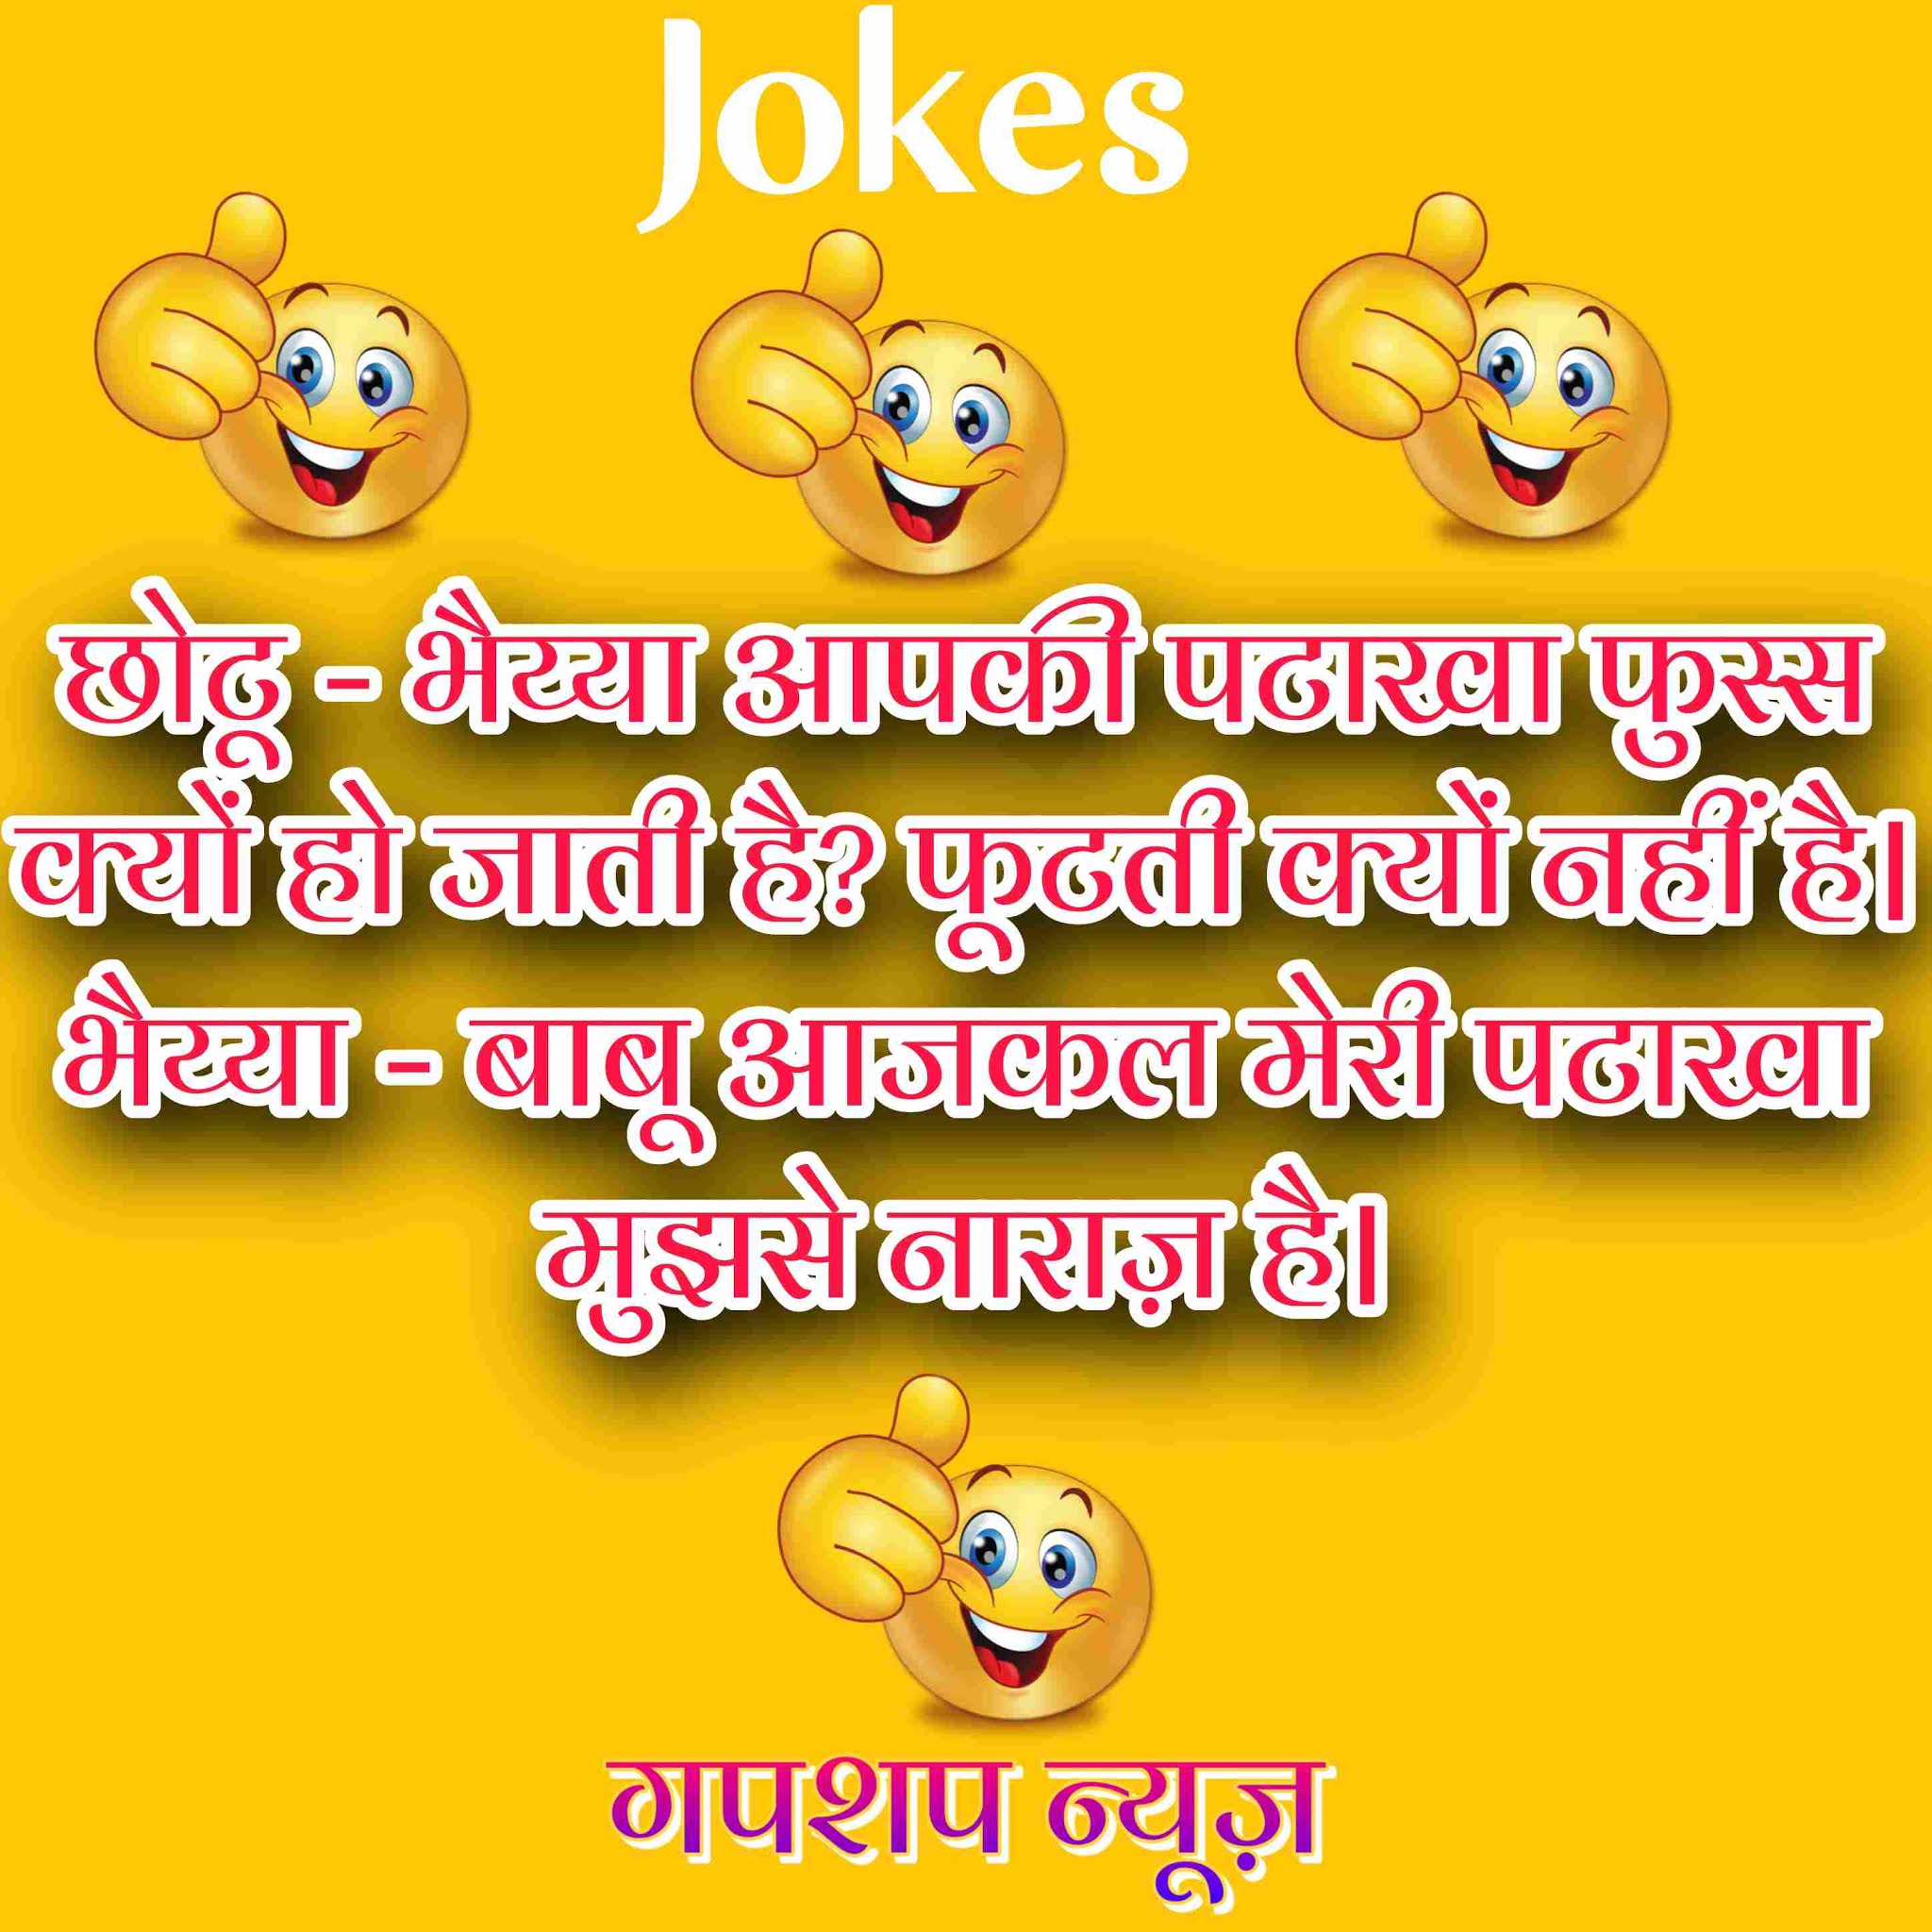 Deepawali Jokes, Chutkule Hasi Wale